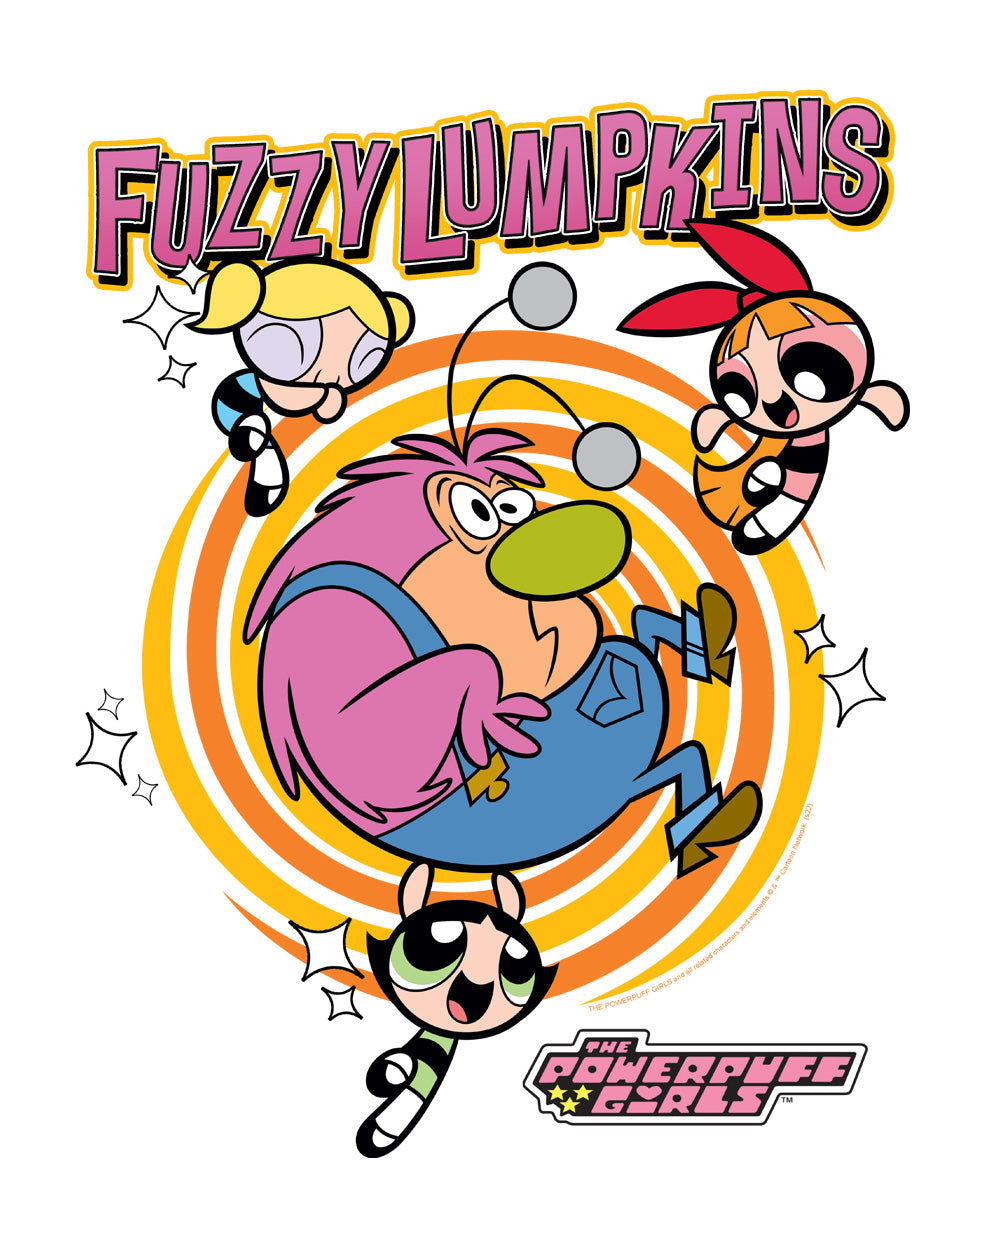 Powerpuff Girls Fuzzy Lumpkins 90s Superhero Cartoon Animation Series Officially Licensed Cotton T-Shirt